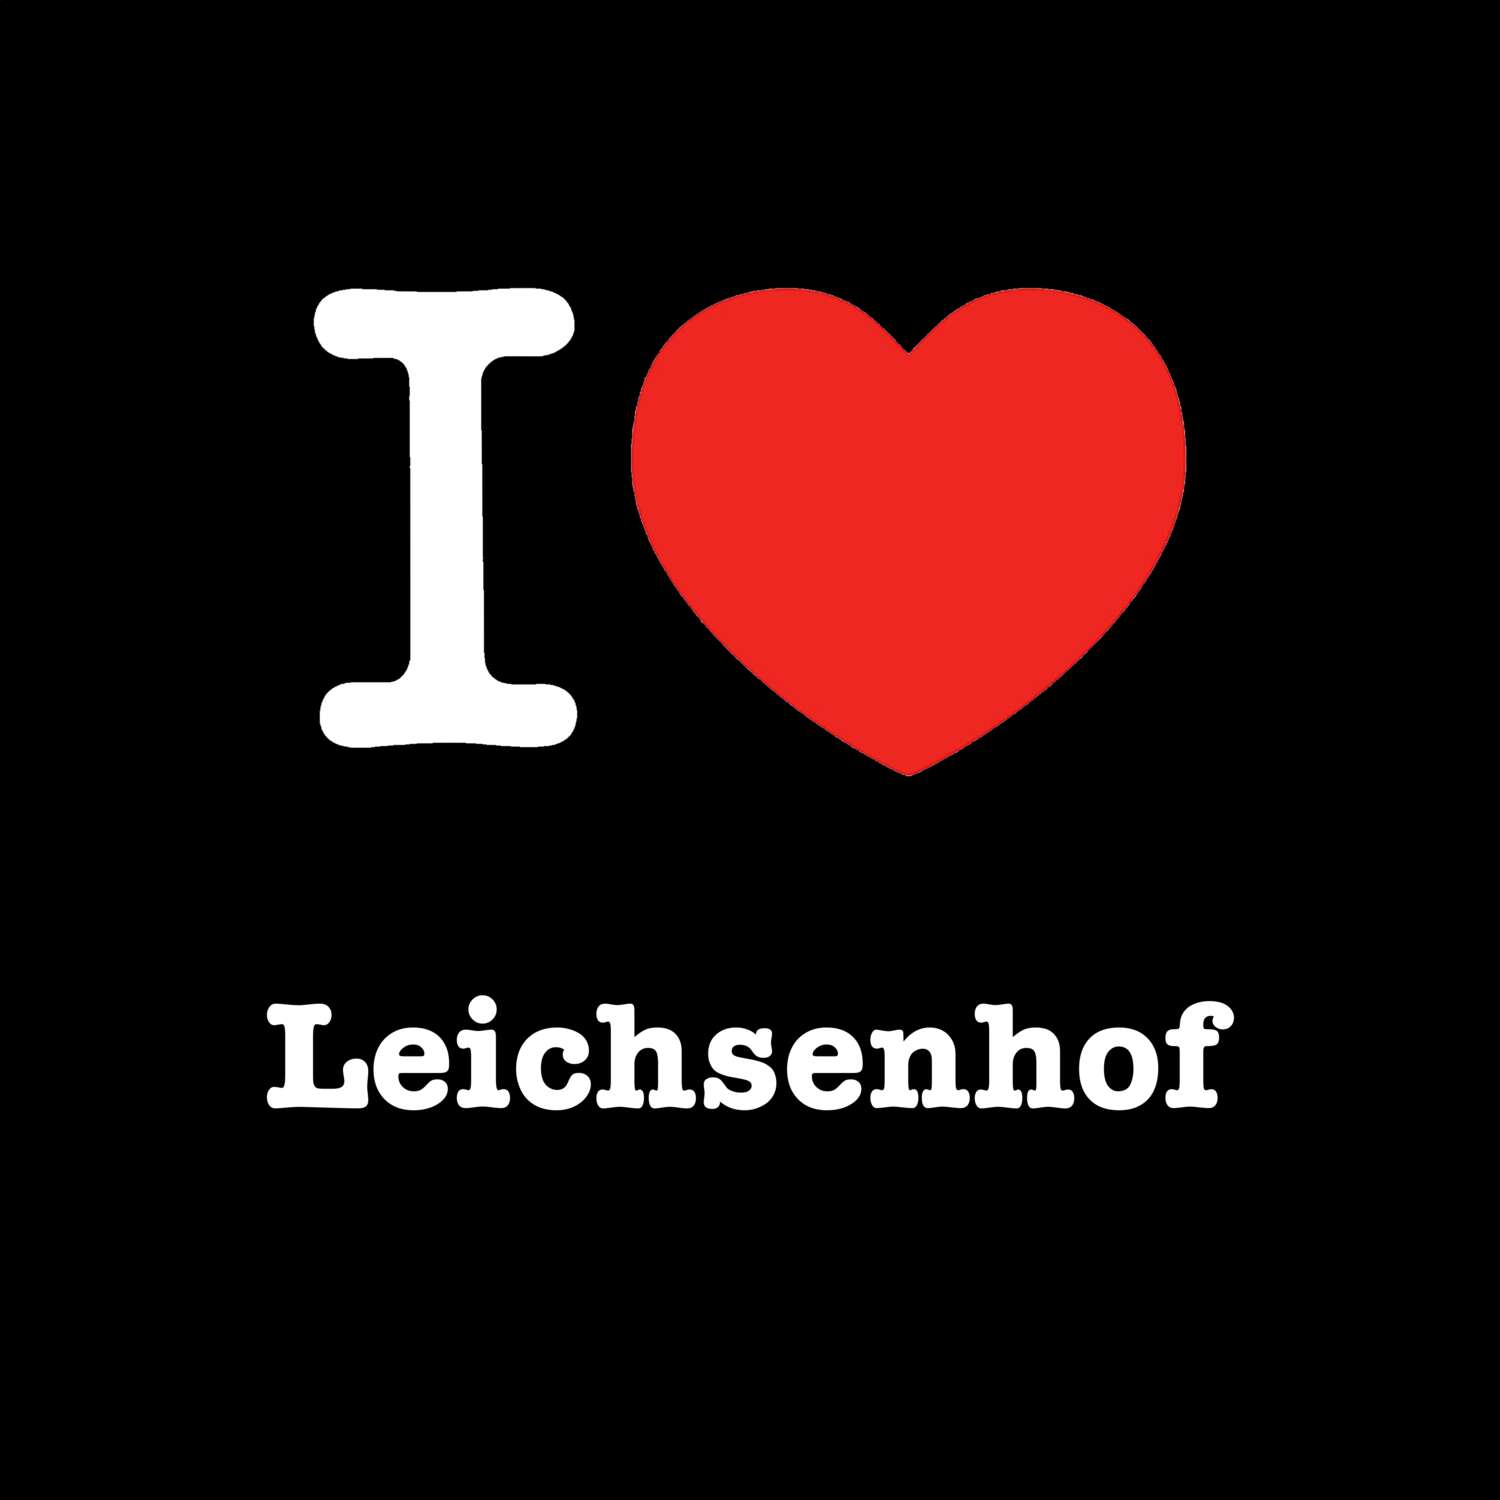 Leichsenhof T-Shirt »I love«